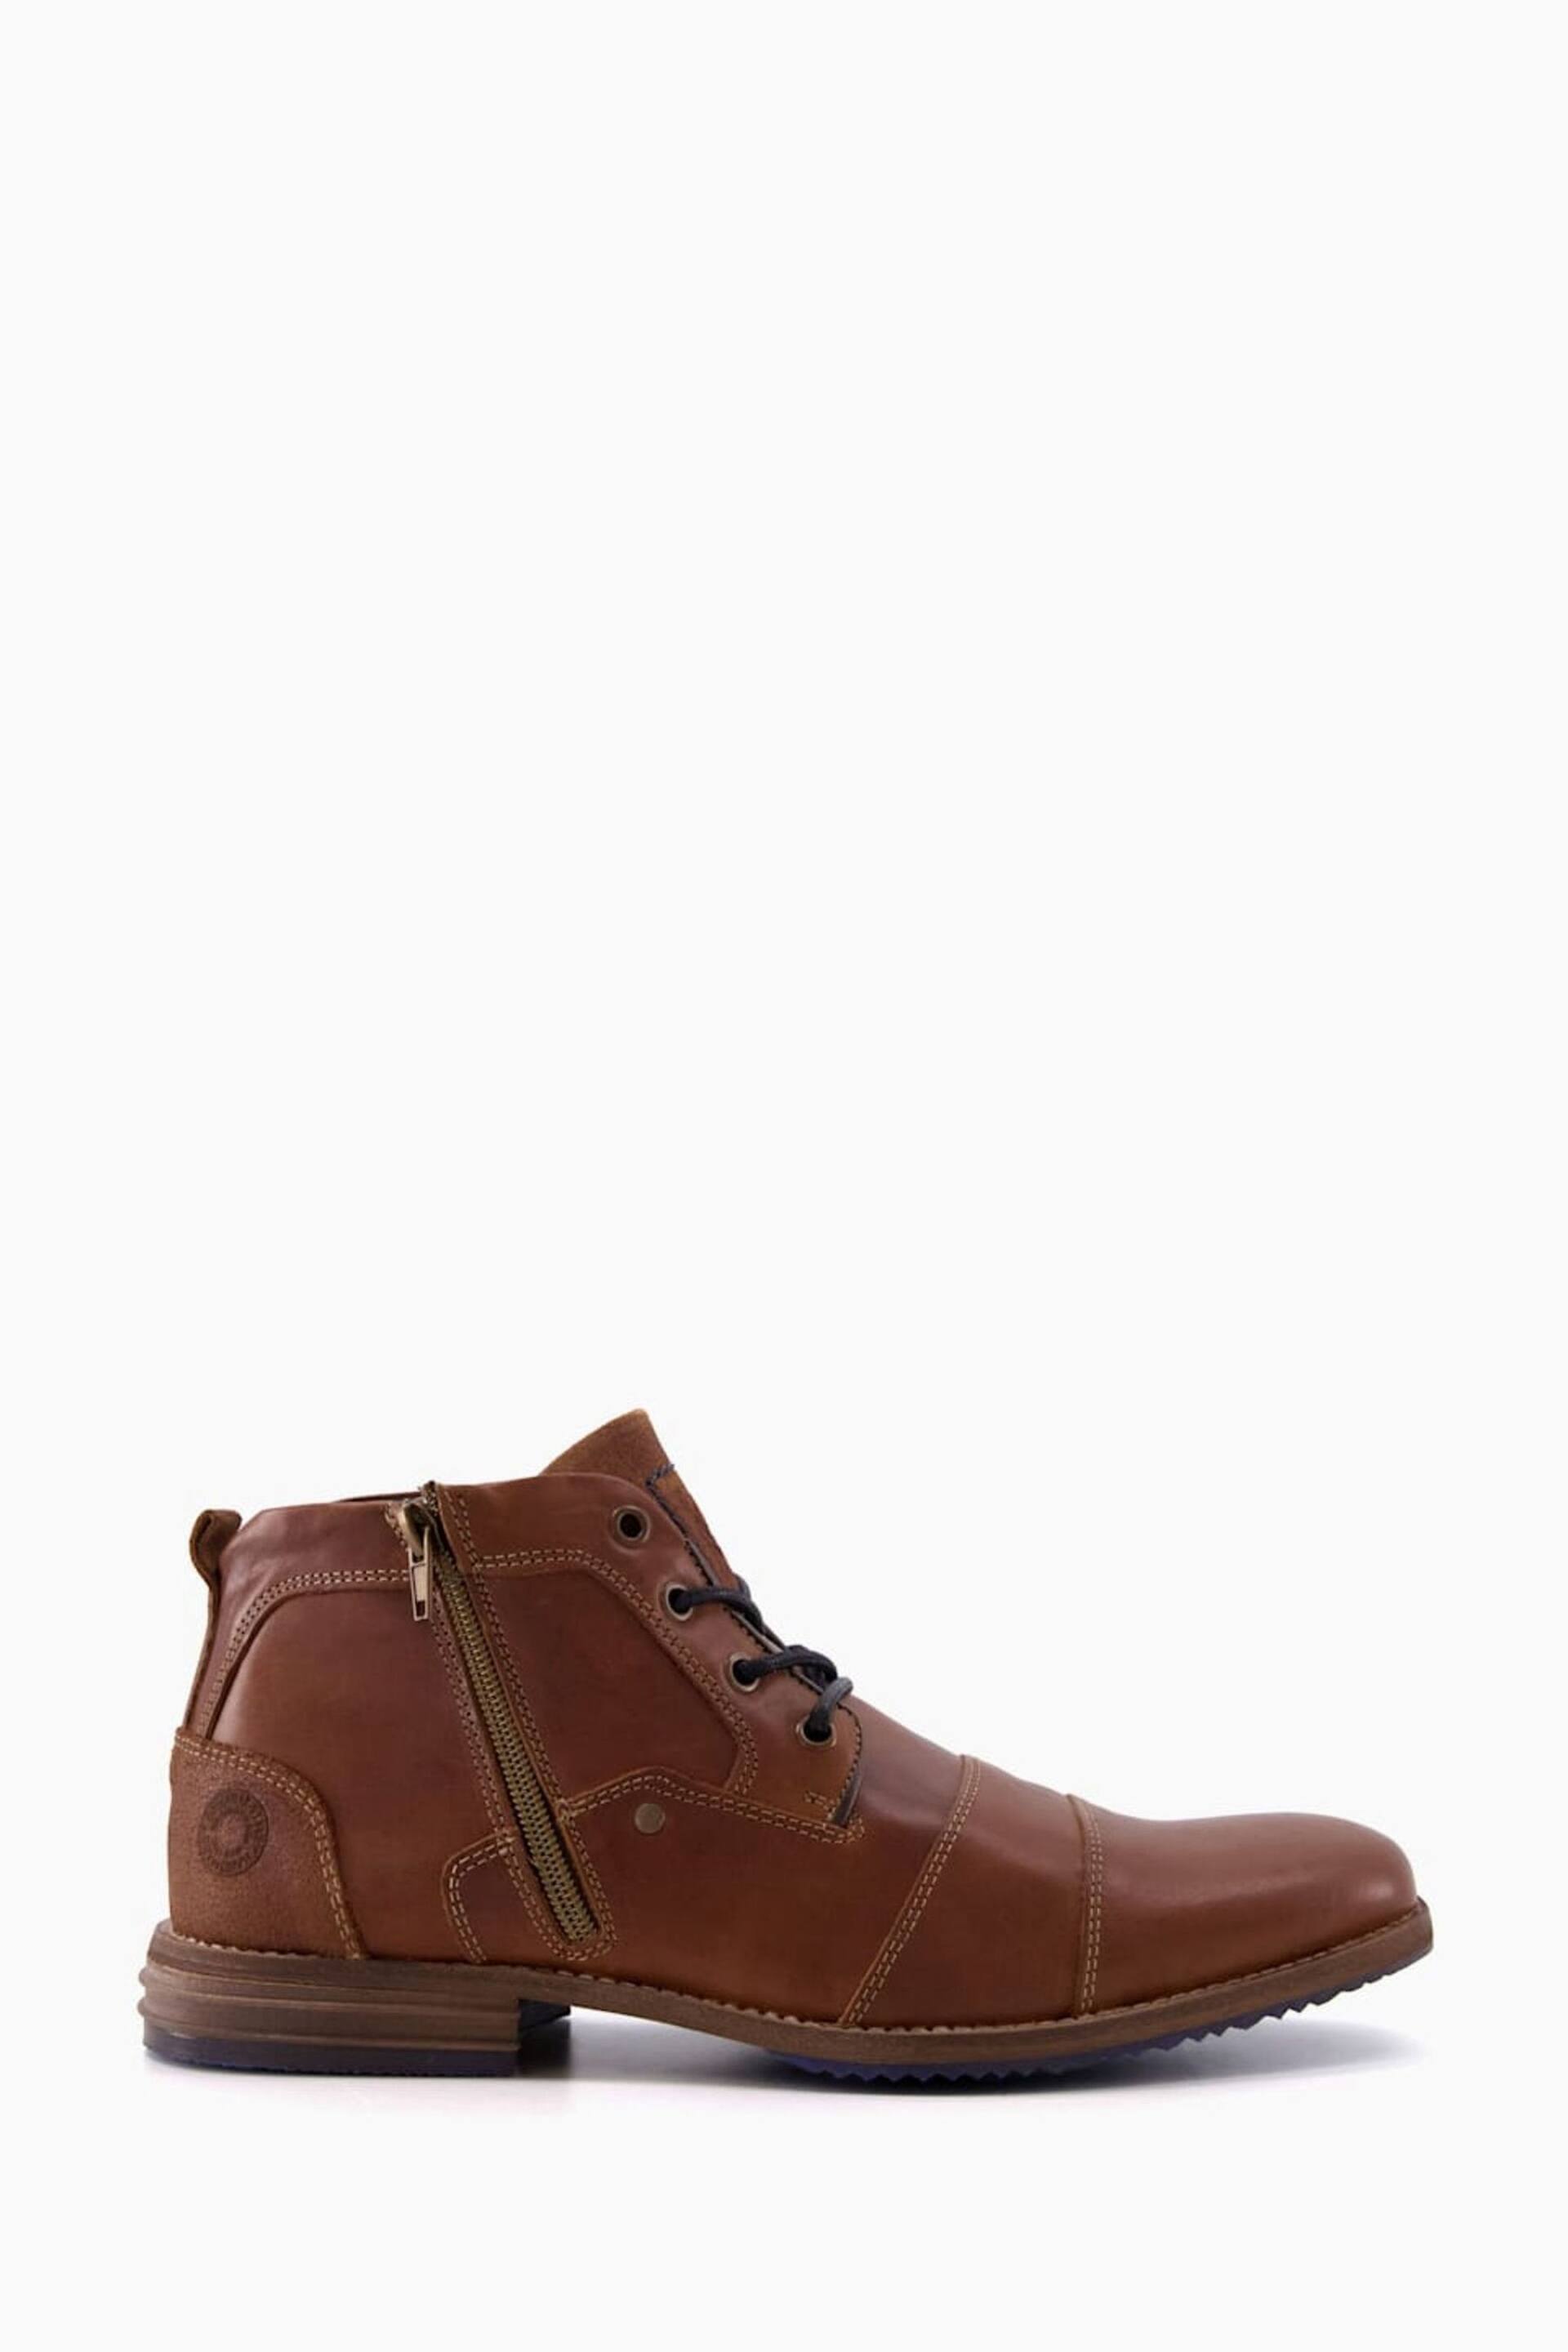 Dune London Brown Captains Double Toe Cap Detail Leather Boots - Image 4 of 6